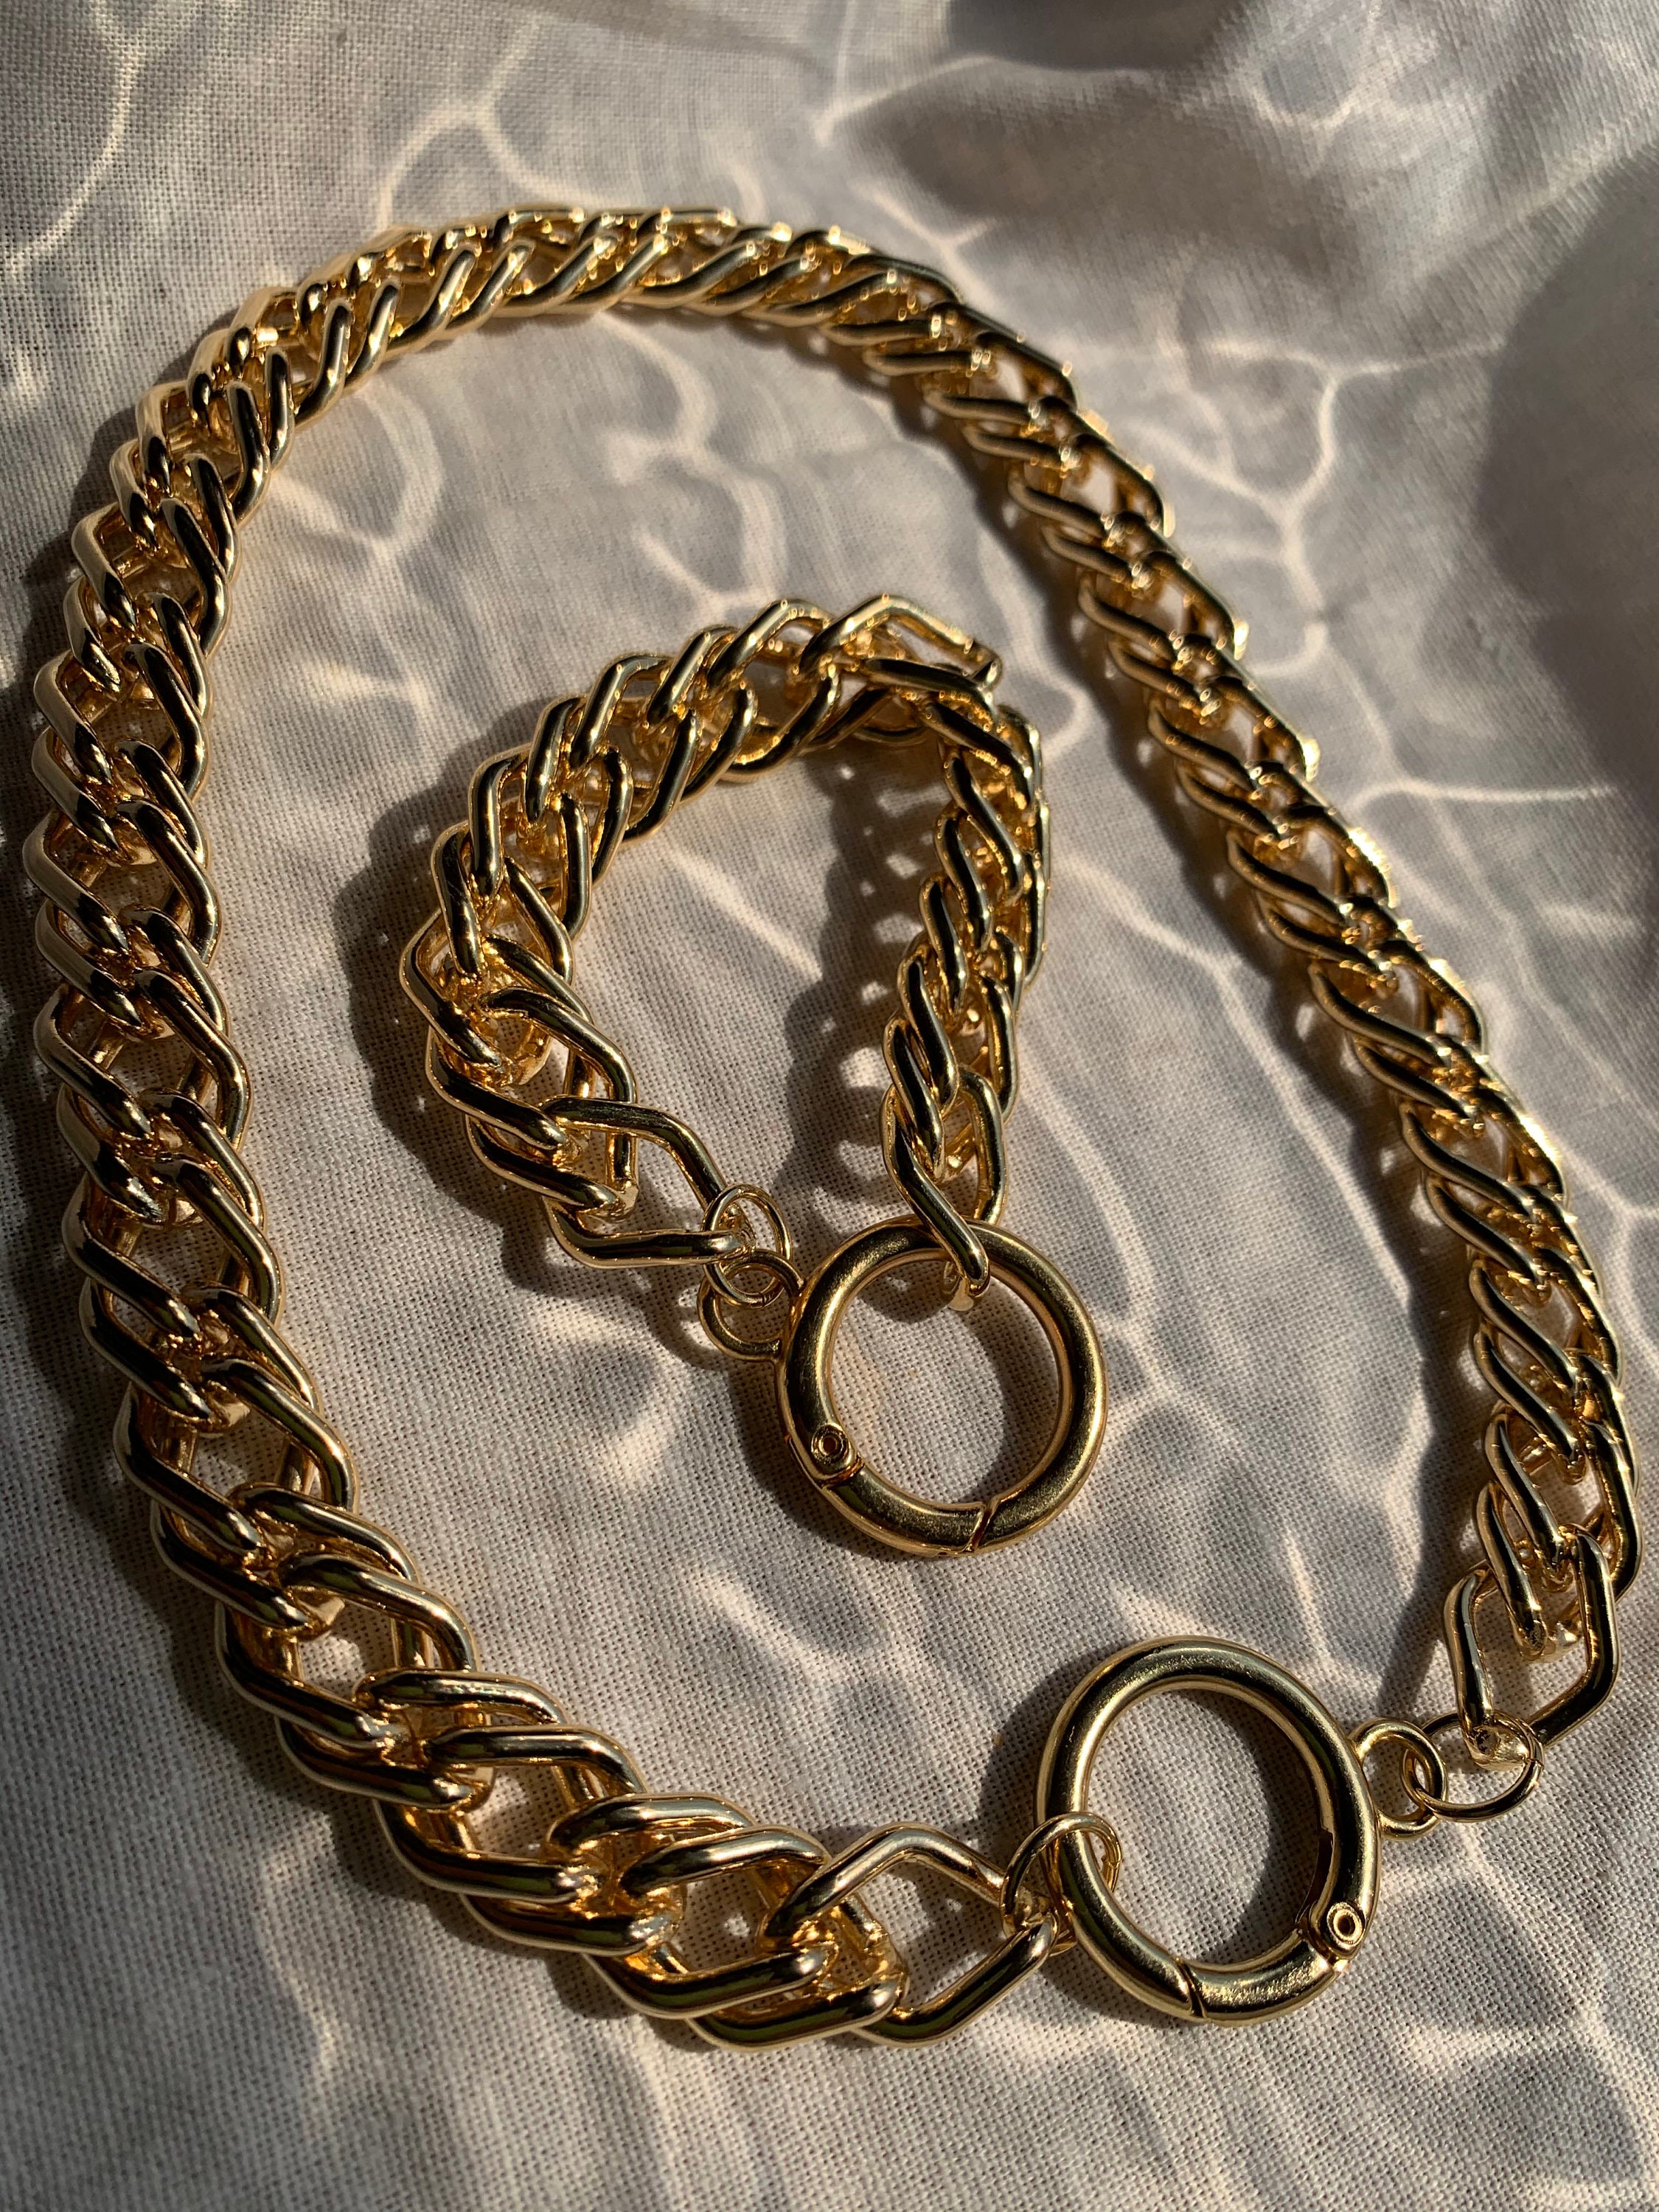 Types of gold chain locks